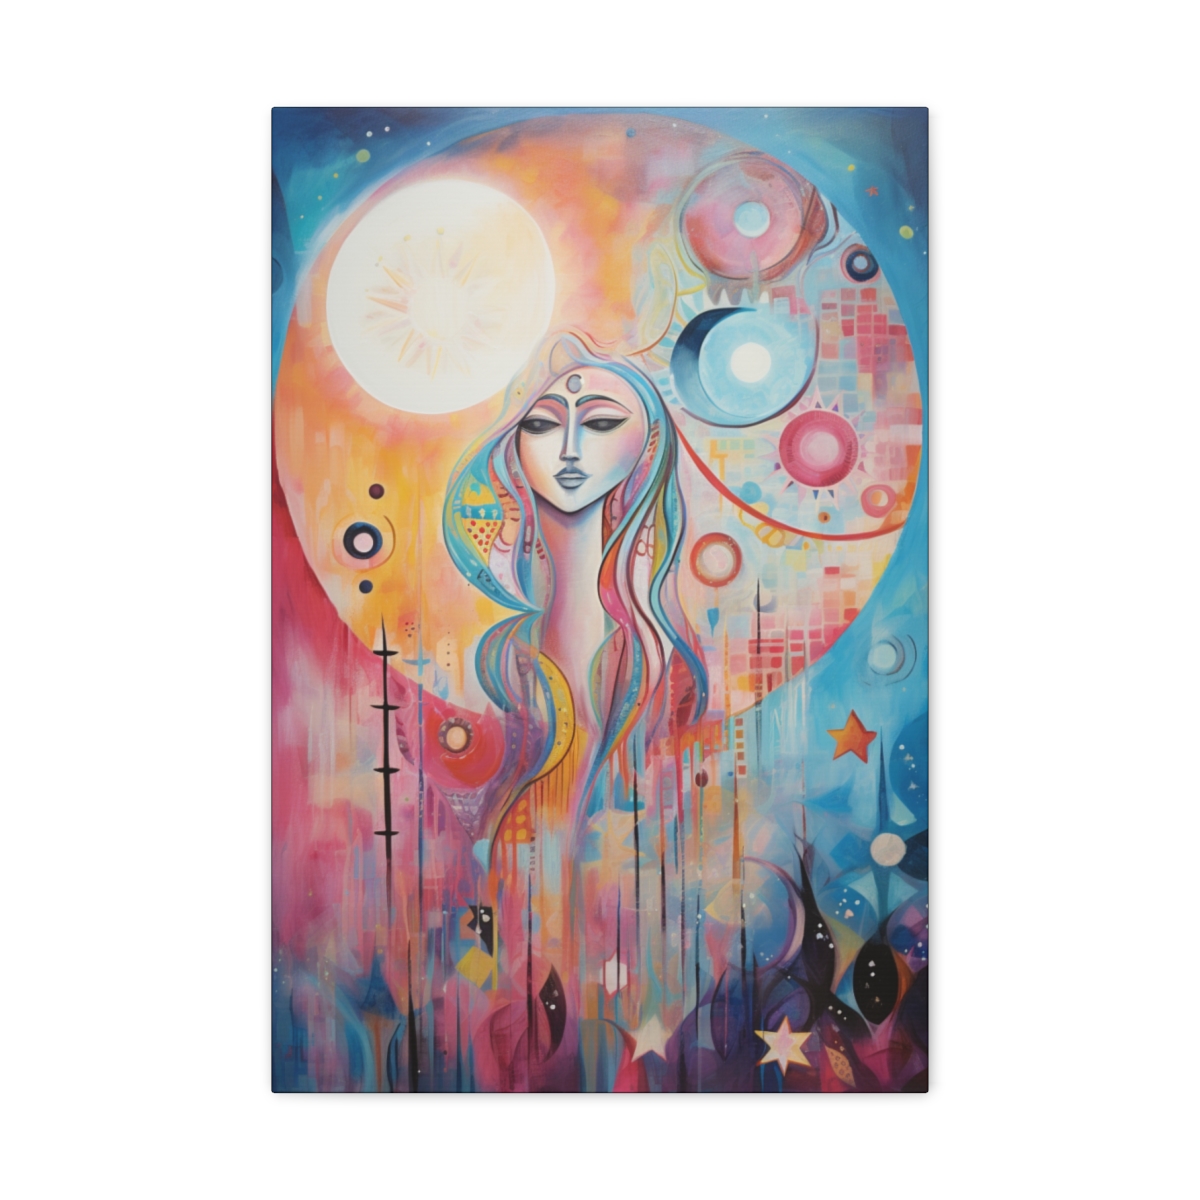 Dreamy Art: The Moon Princess